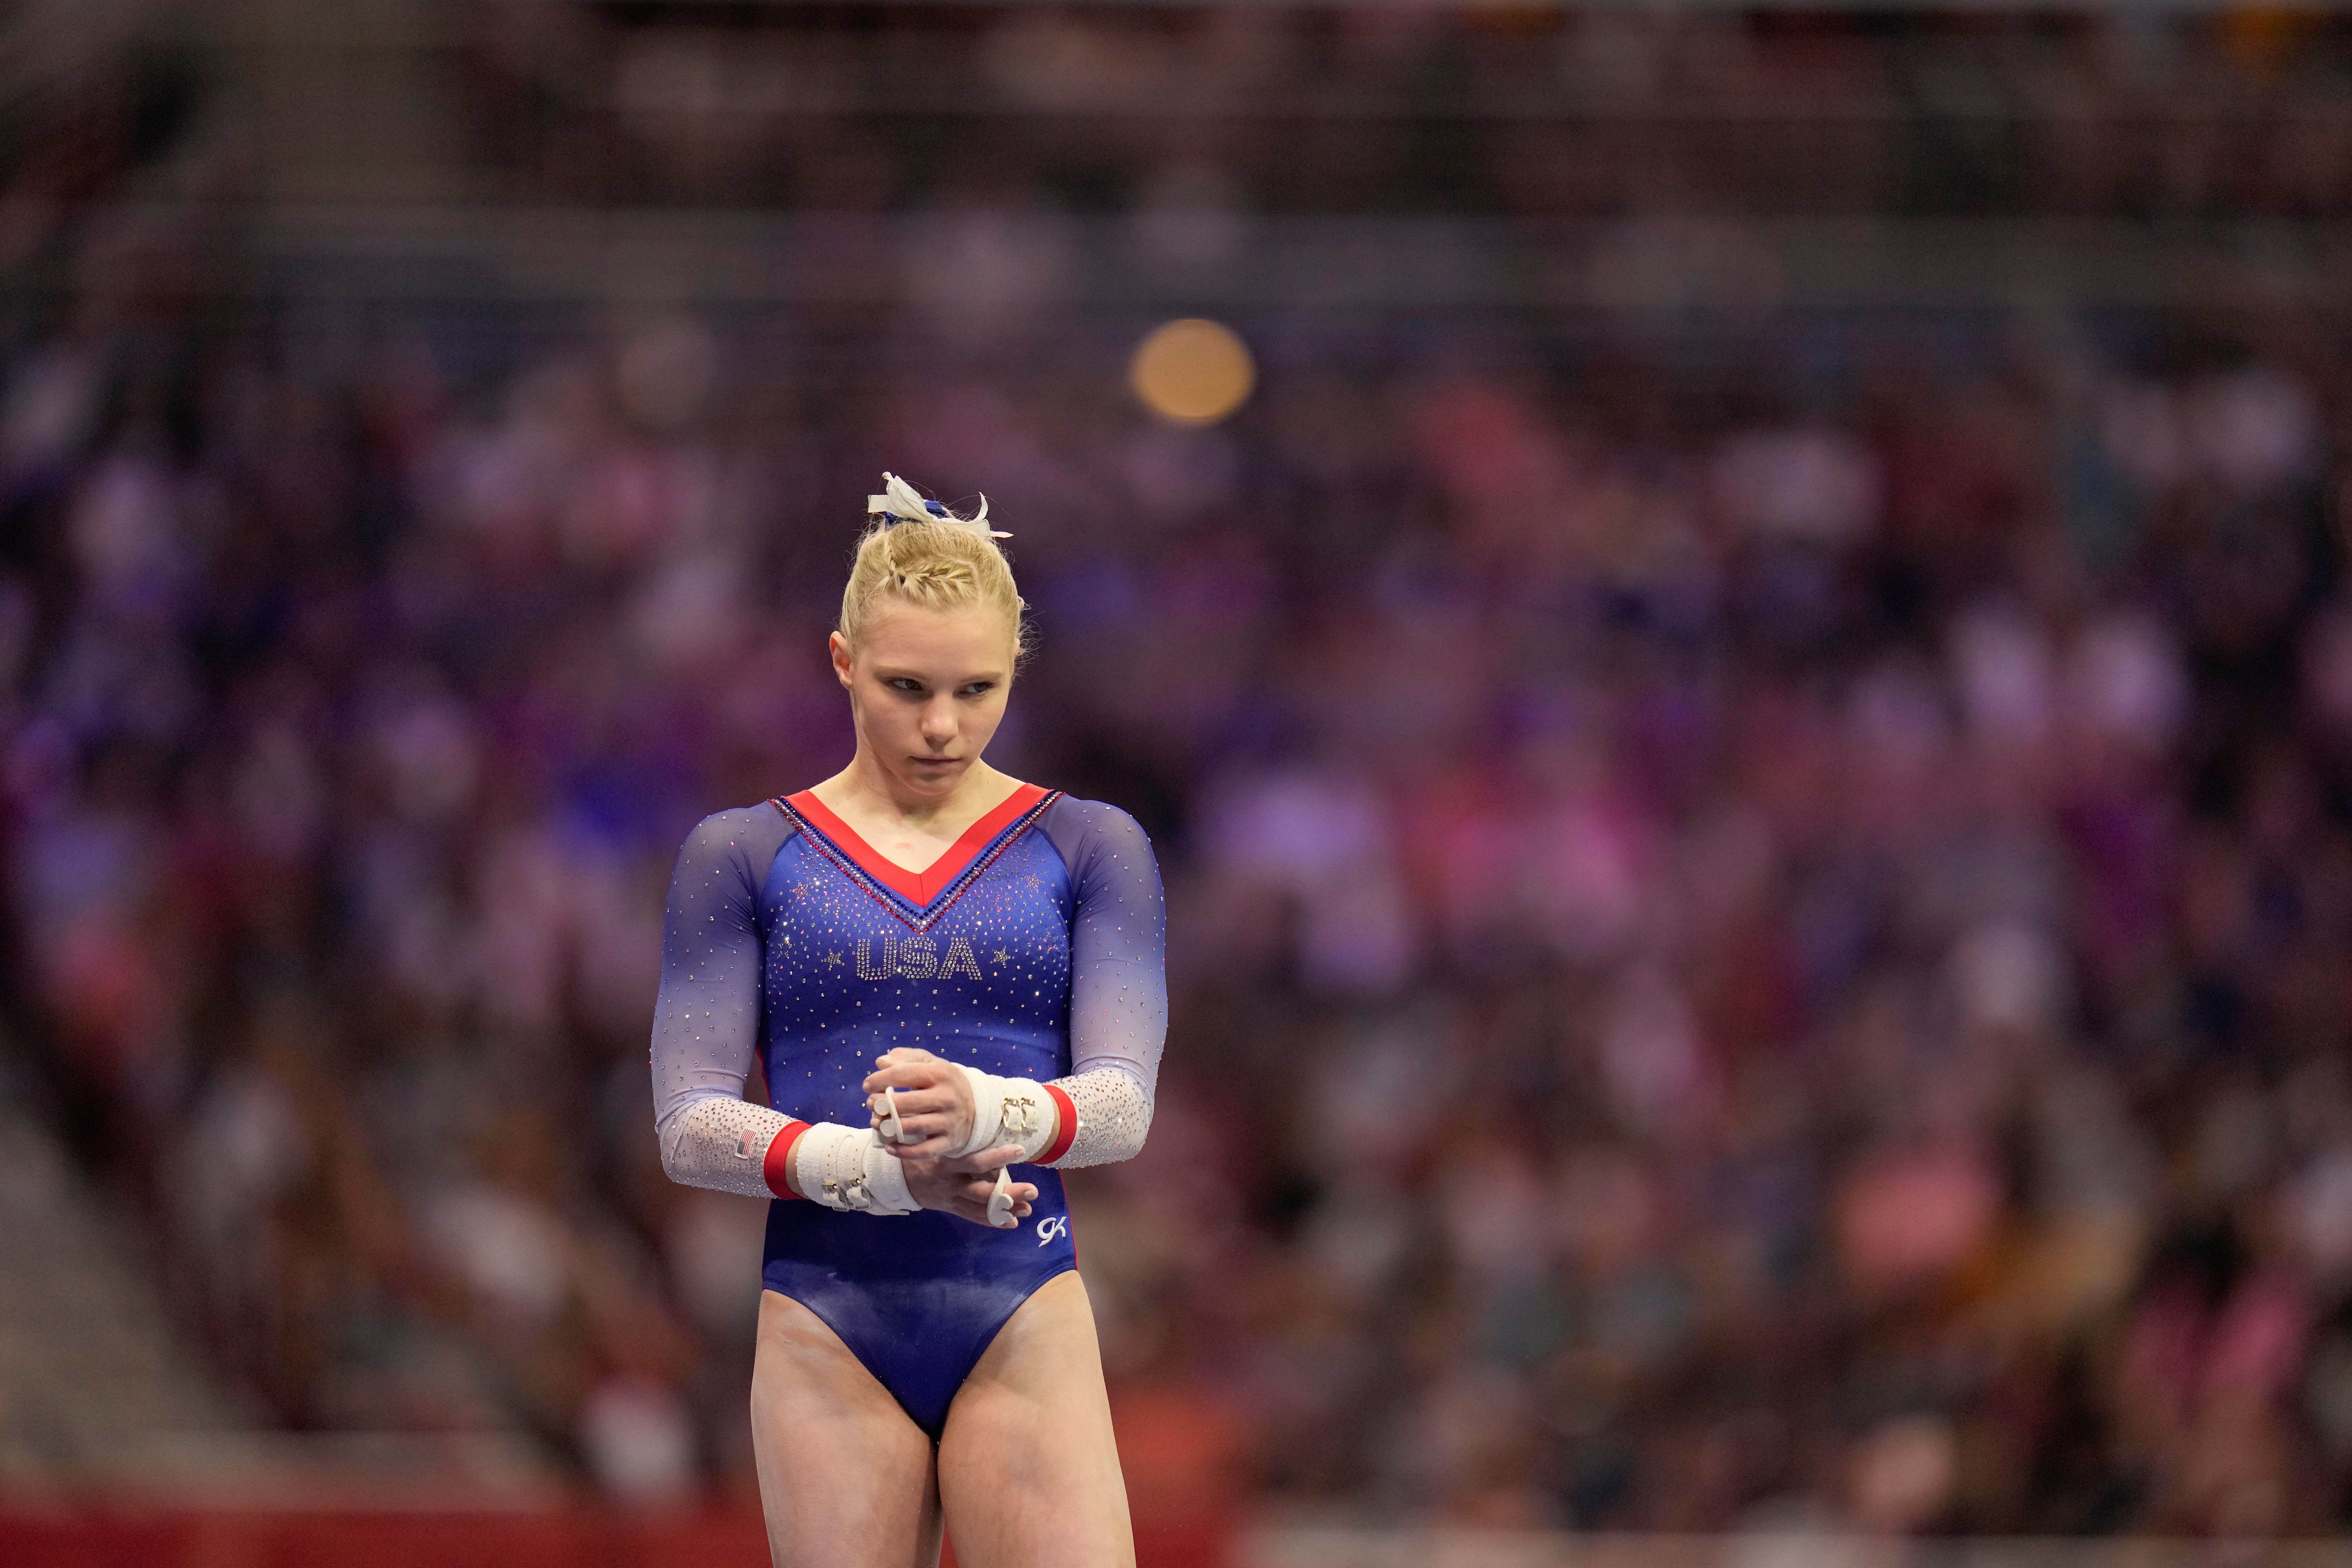 Jade Carey in Leotards: Best Photos in Gymnastics Uniforms